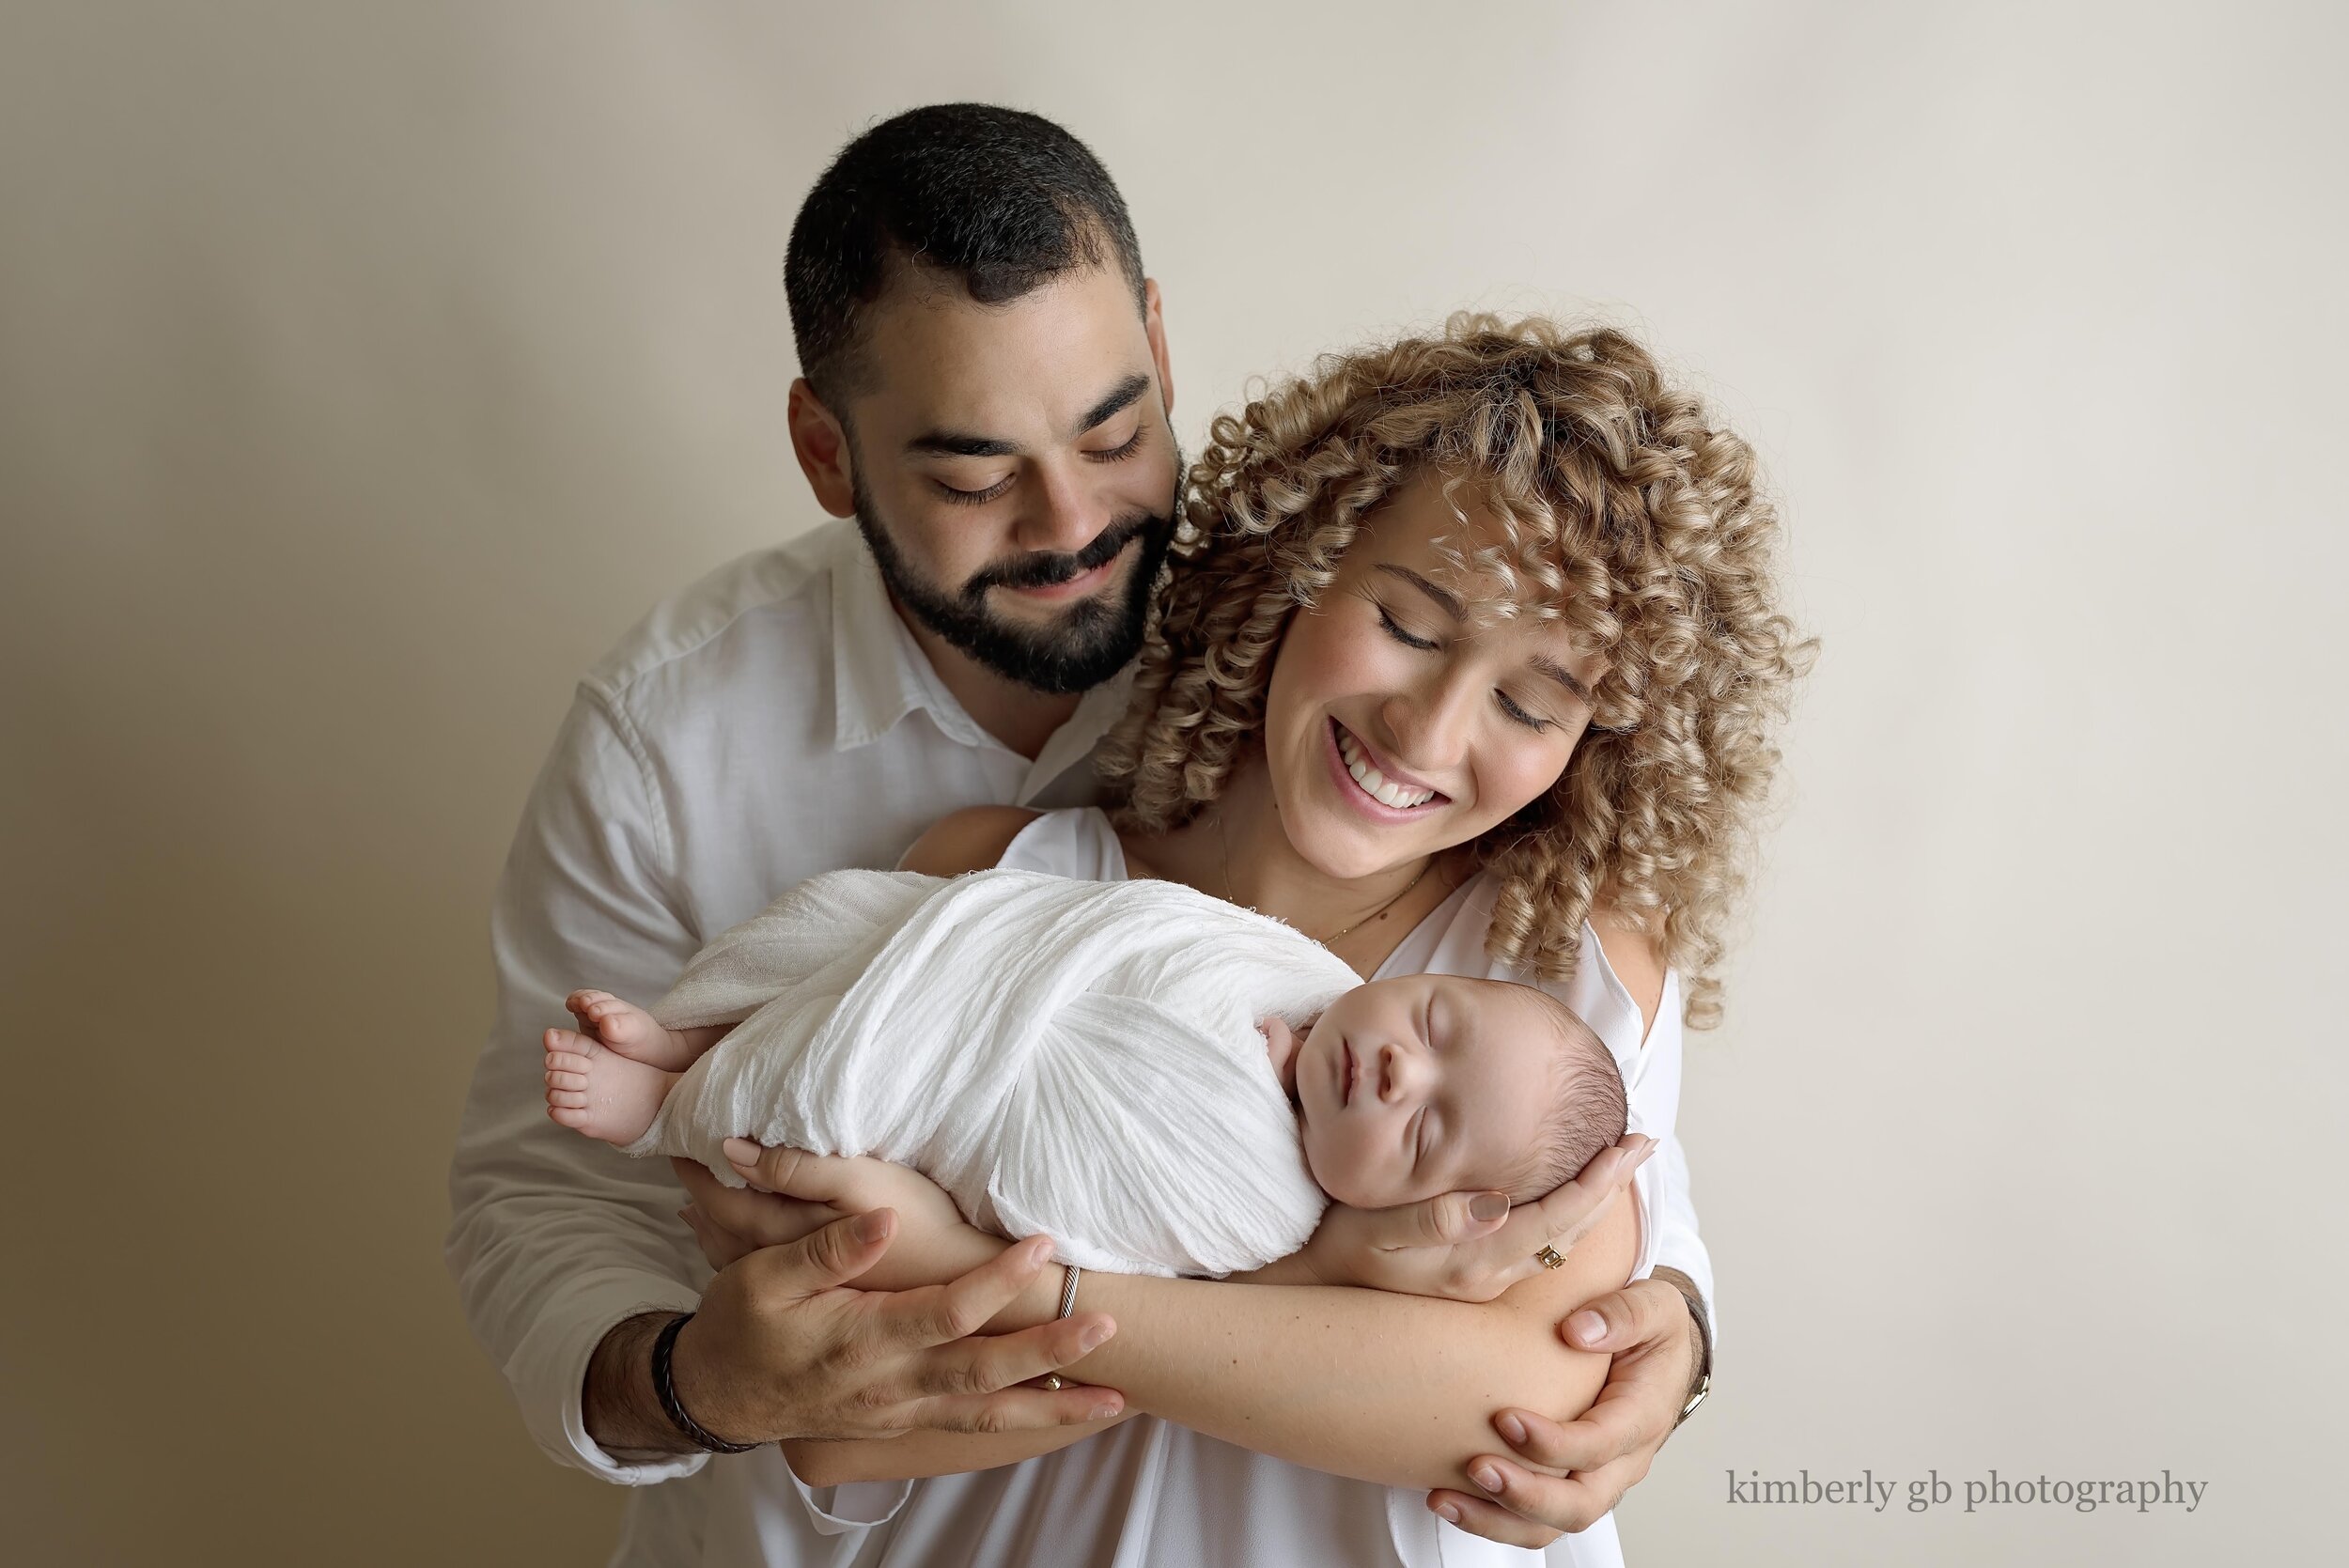 fotografia-de-recien-nacidos-bebes-newborn-en-puerto-rico-kimberly-gb-photography-fotografa-625.jpg